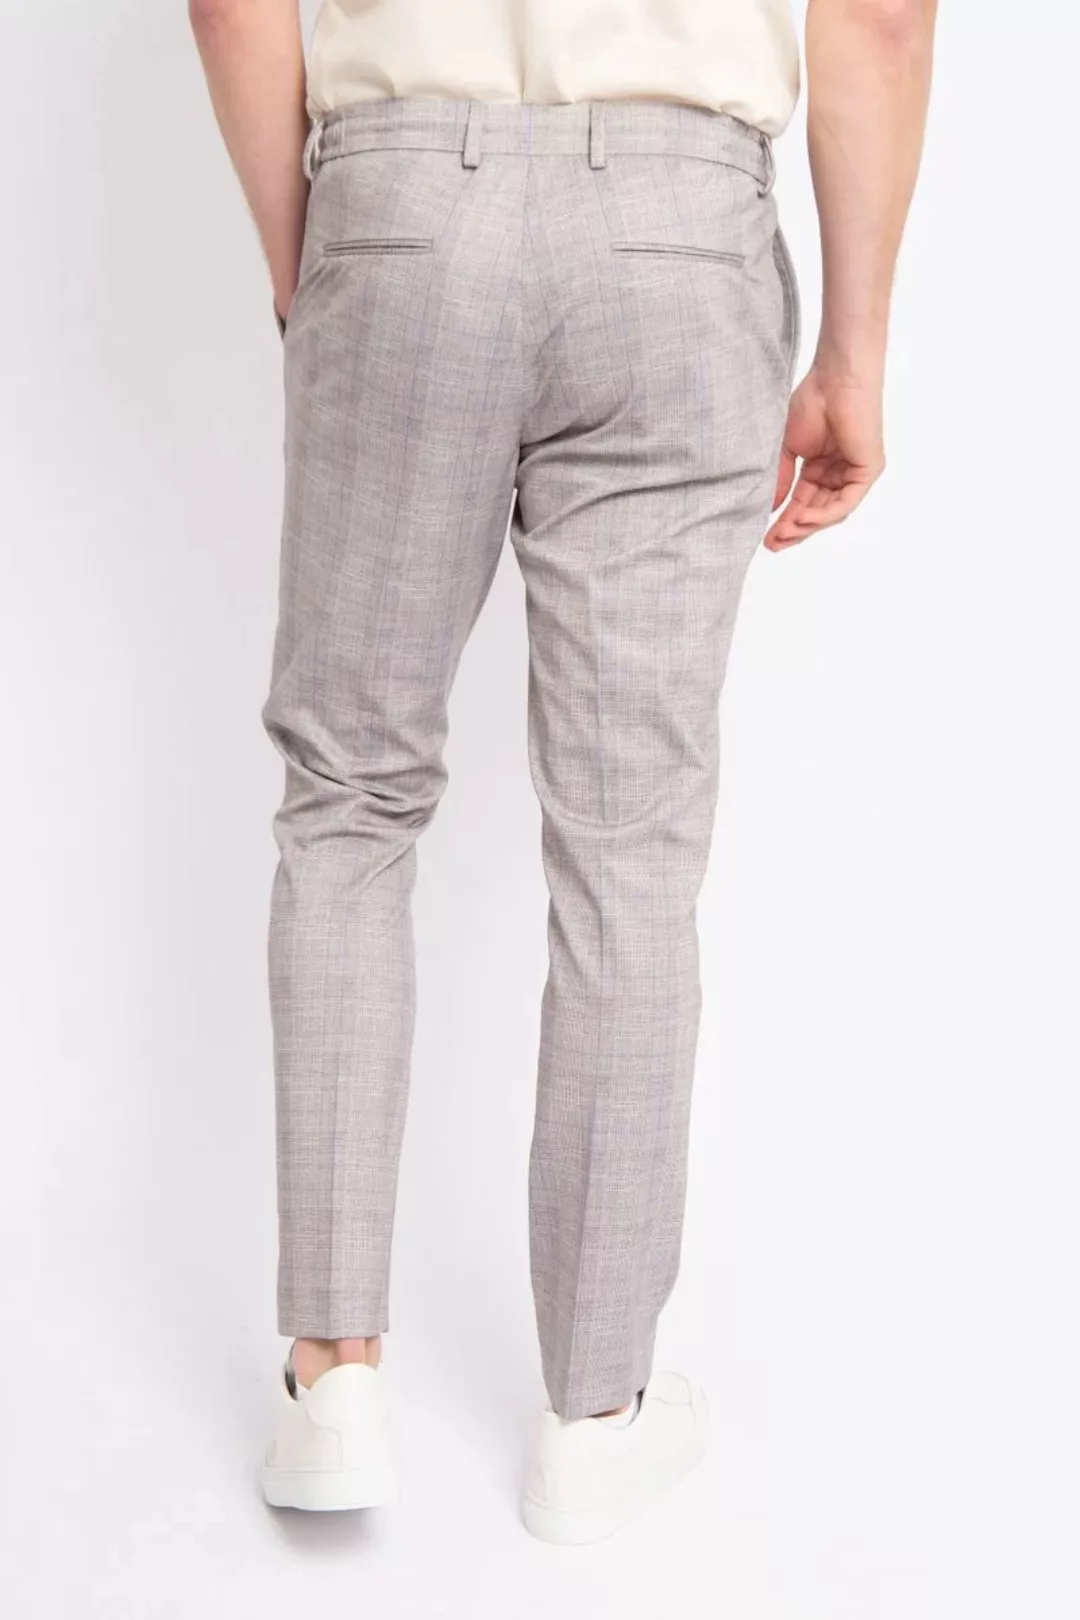 Suitable Dace Jersey Pantalon Karos Hellbraun - Größe 98 günstig online kaufen